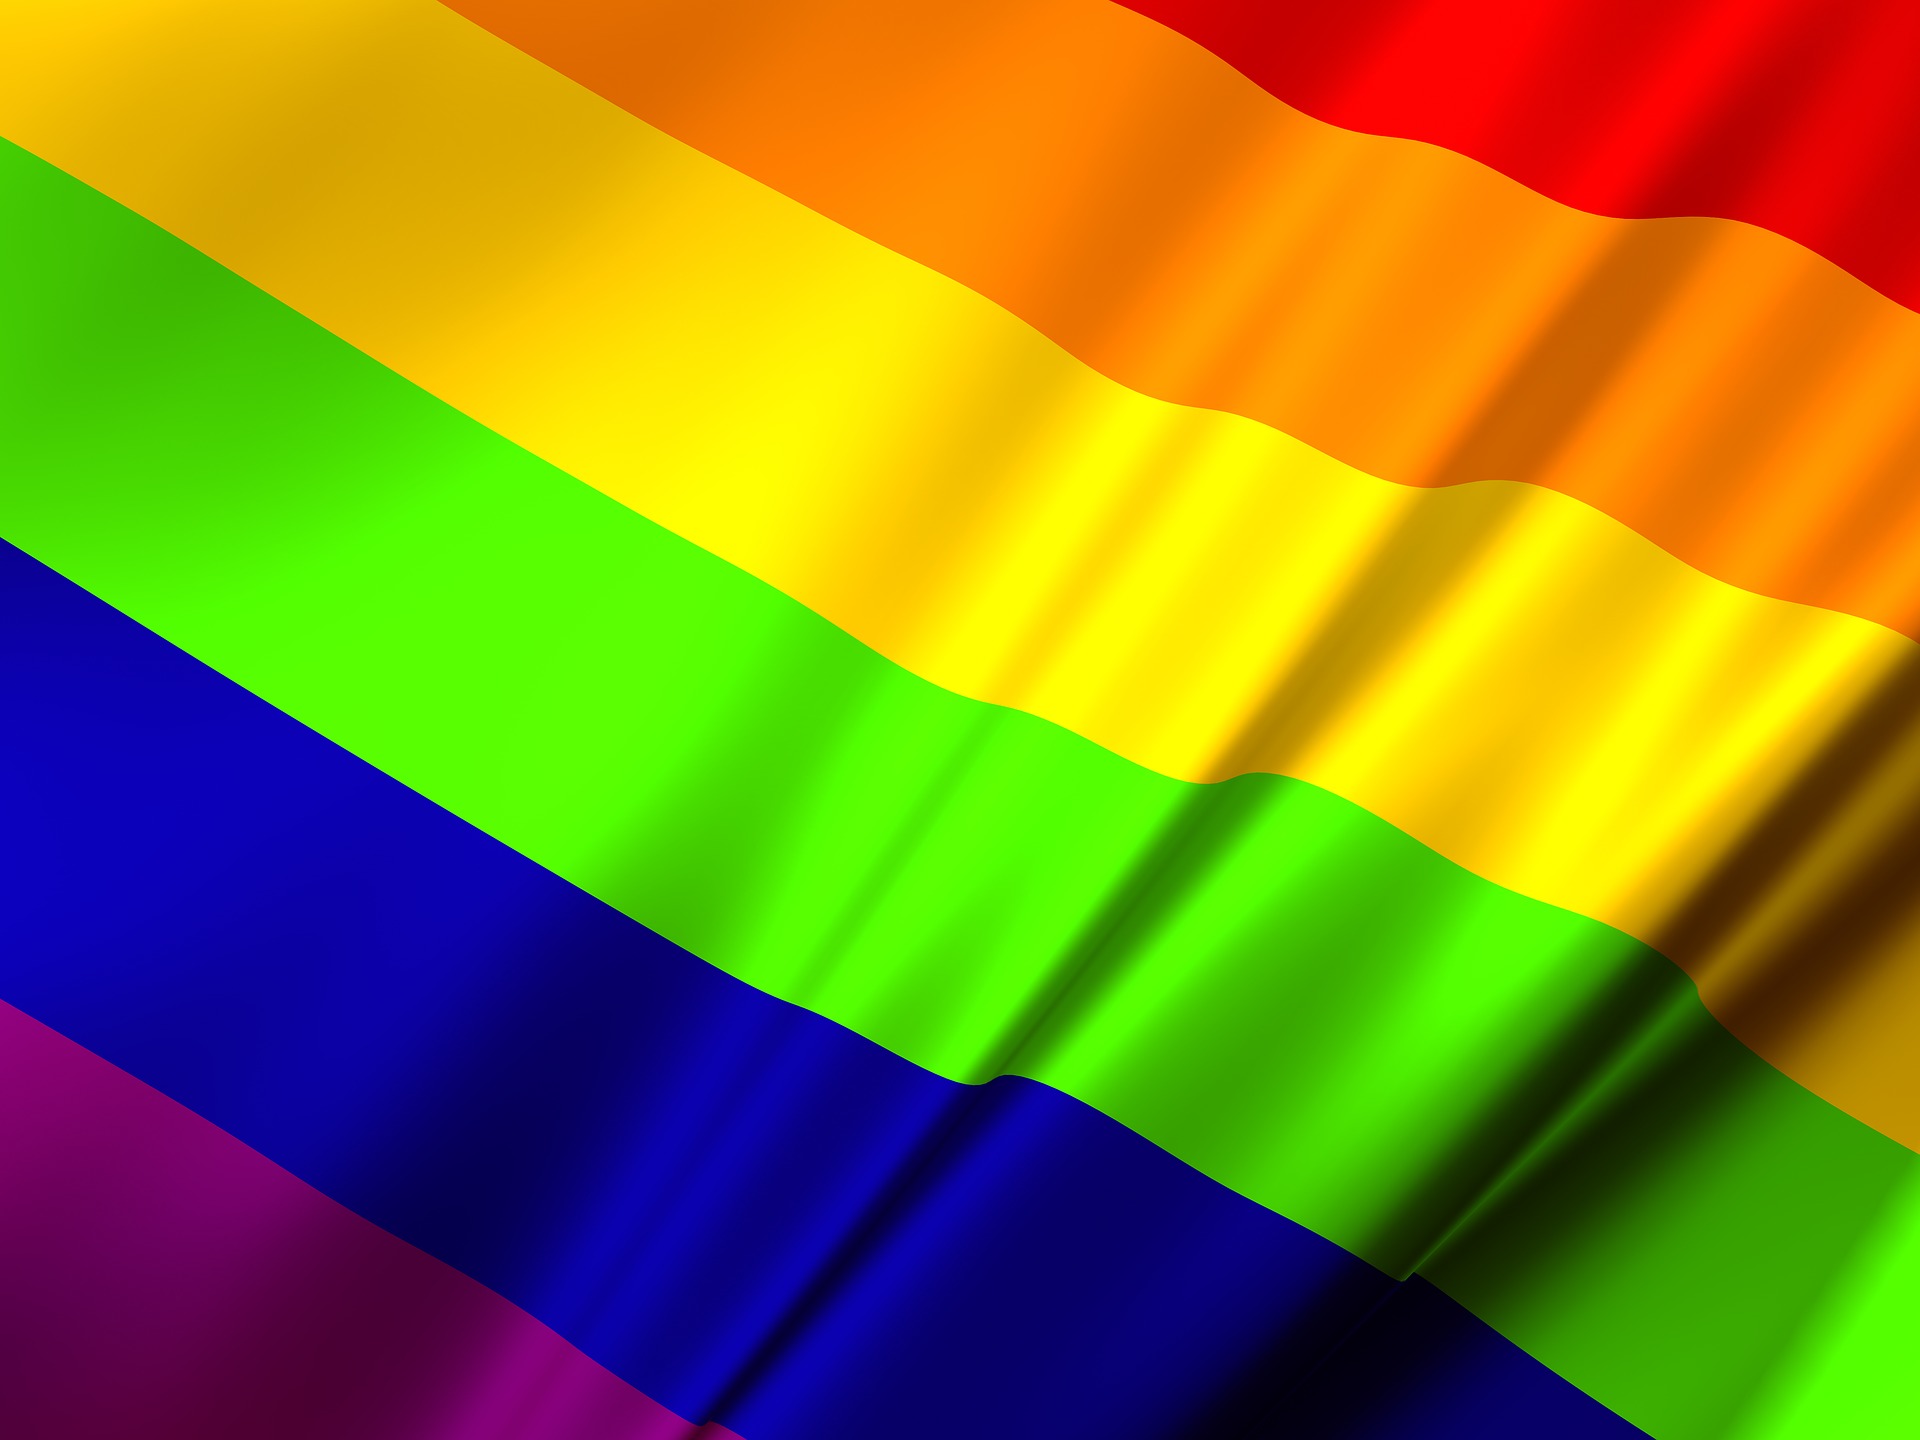 Regenbogenfahne (c) Bild von 3D Animation Production Company auf Pixabay